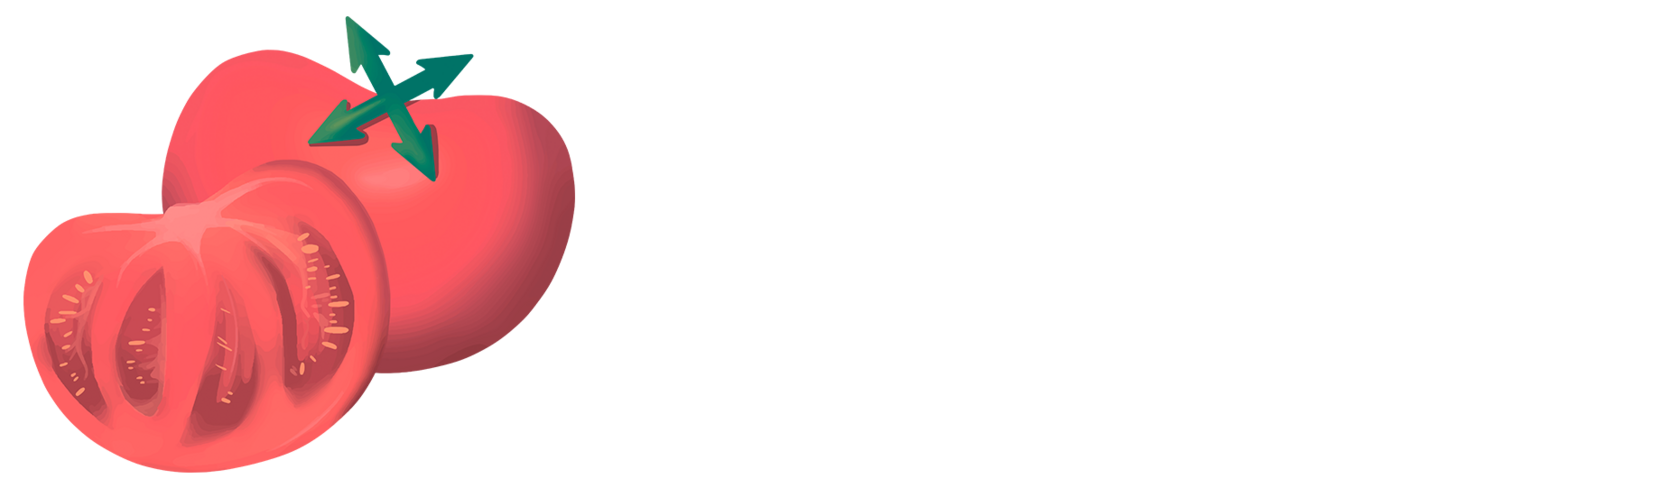 SladPomidor